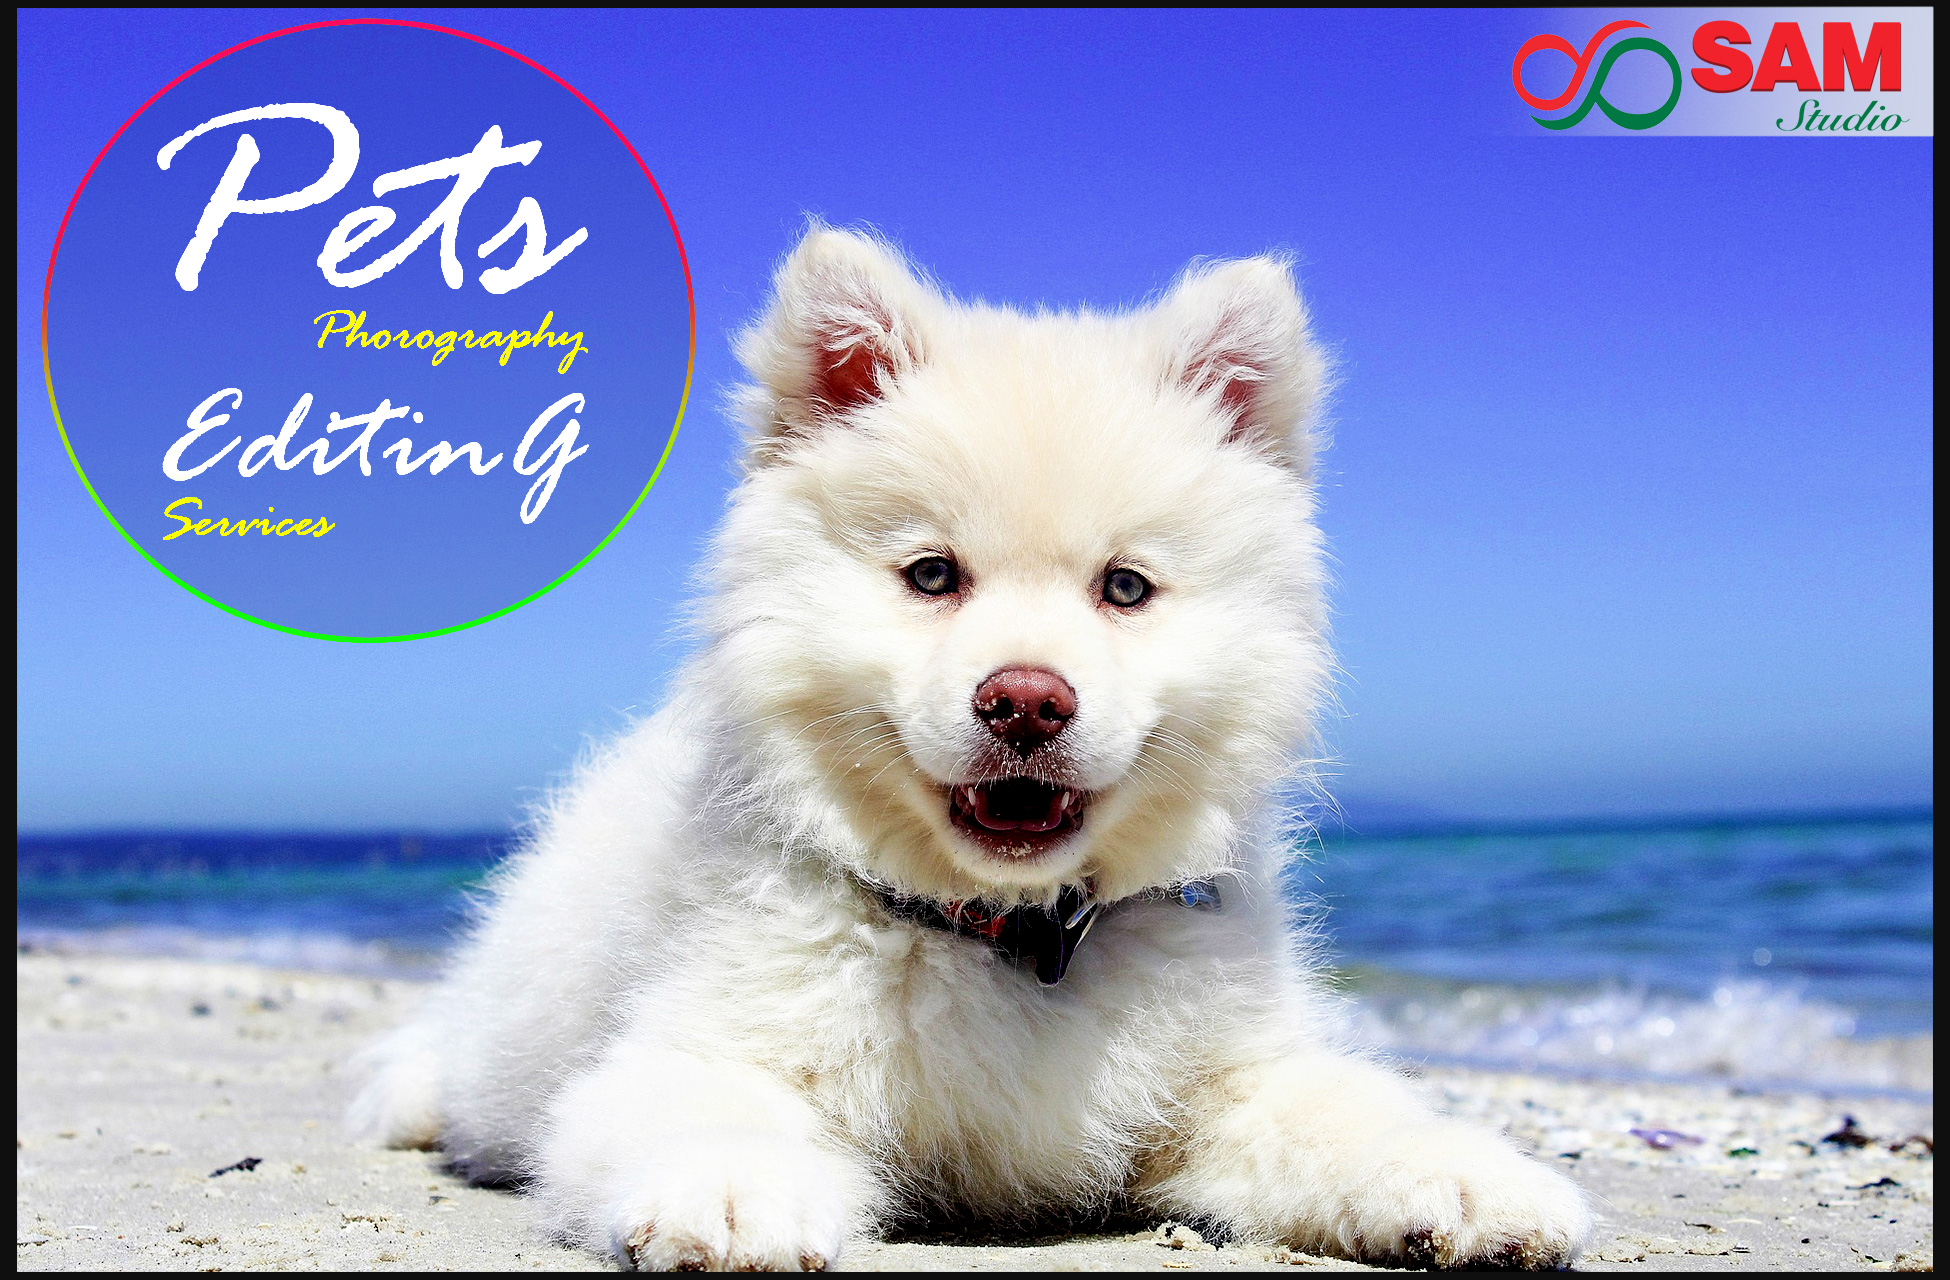 Pet Photo Editing Services